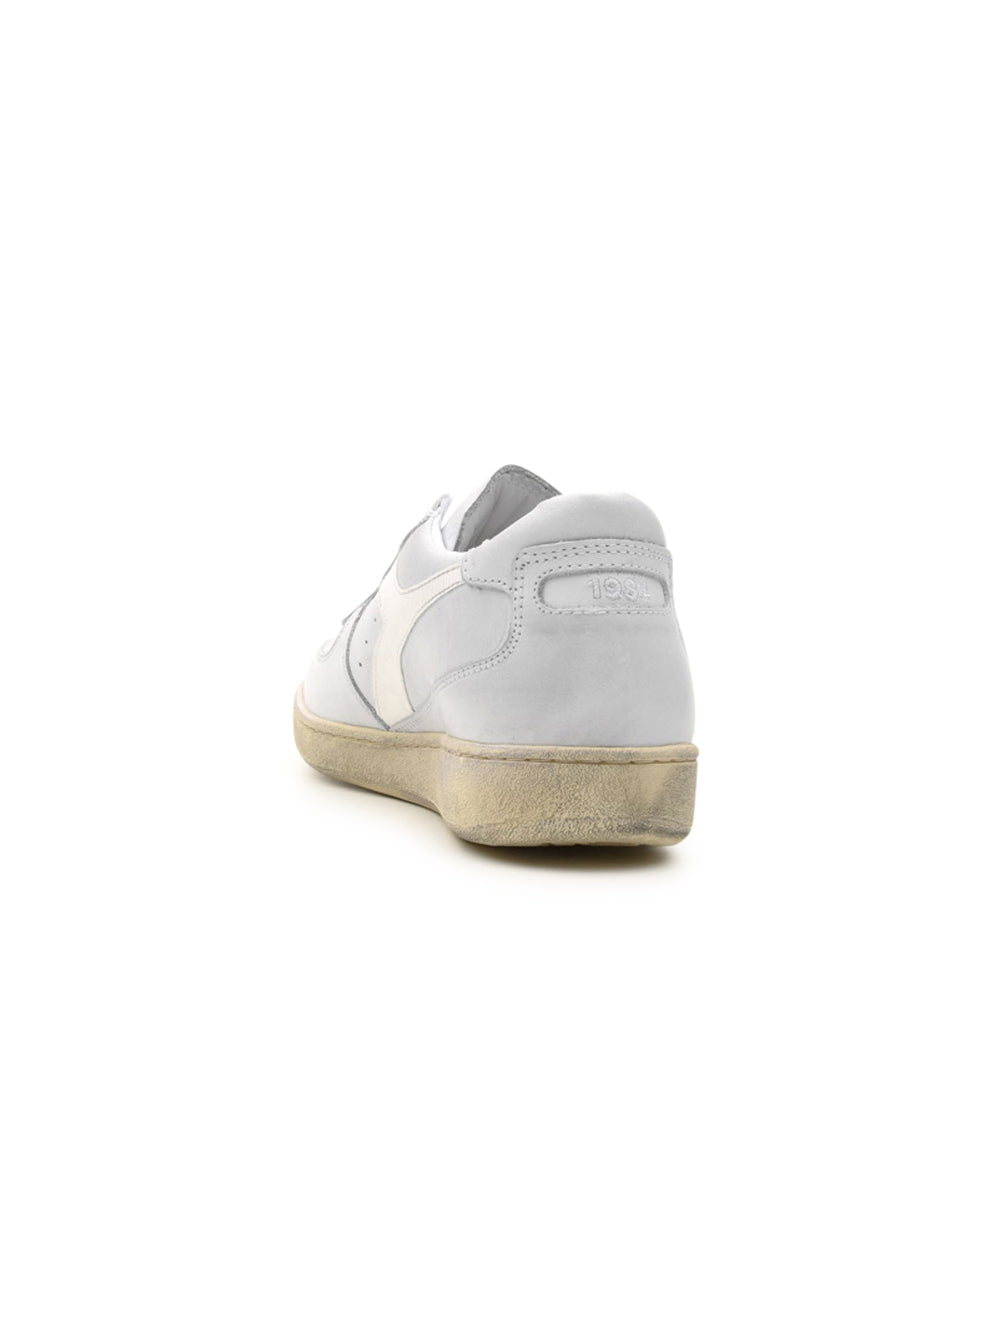 Sneakers Basse DIADORA Unisex 201.179043 MI BASKET USED LOW Bianco